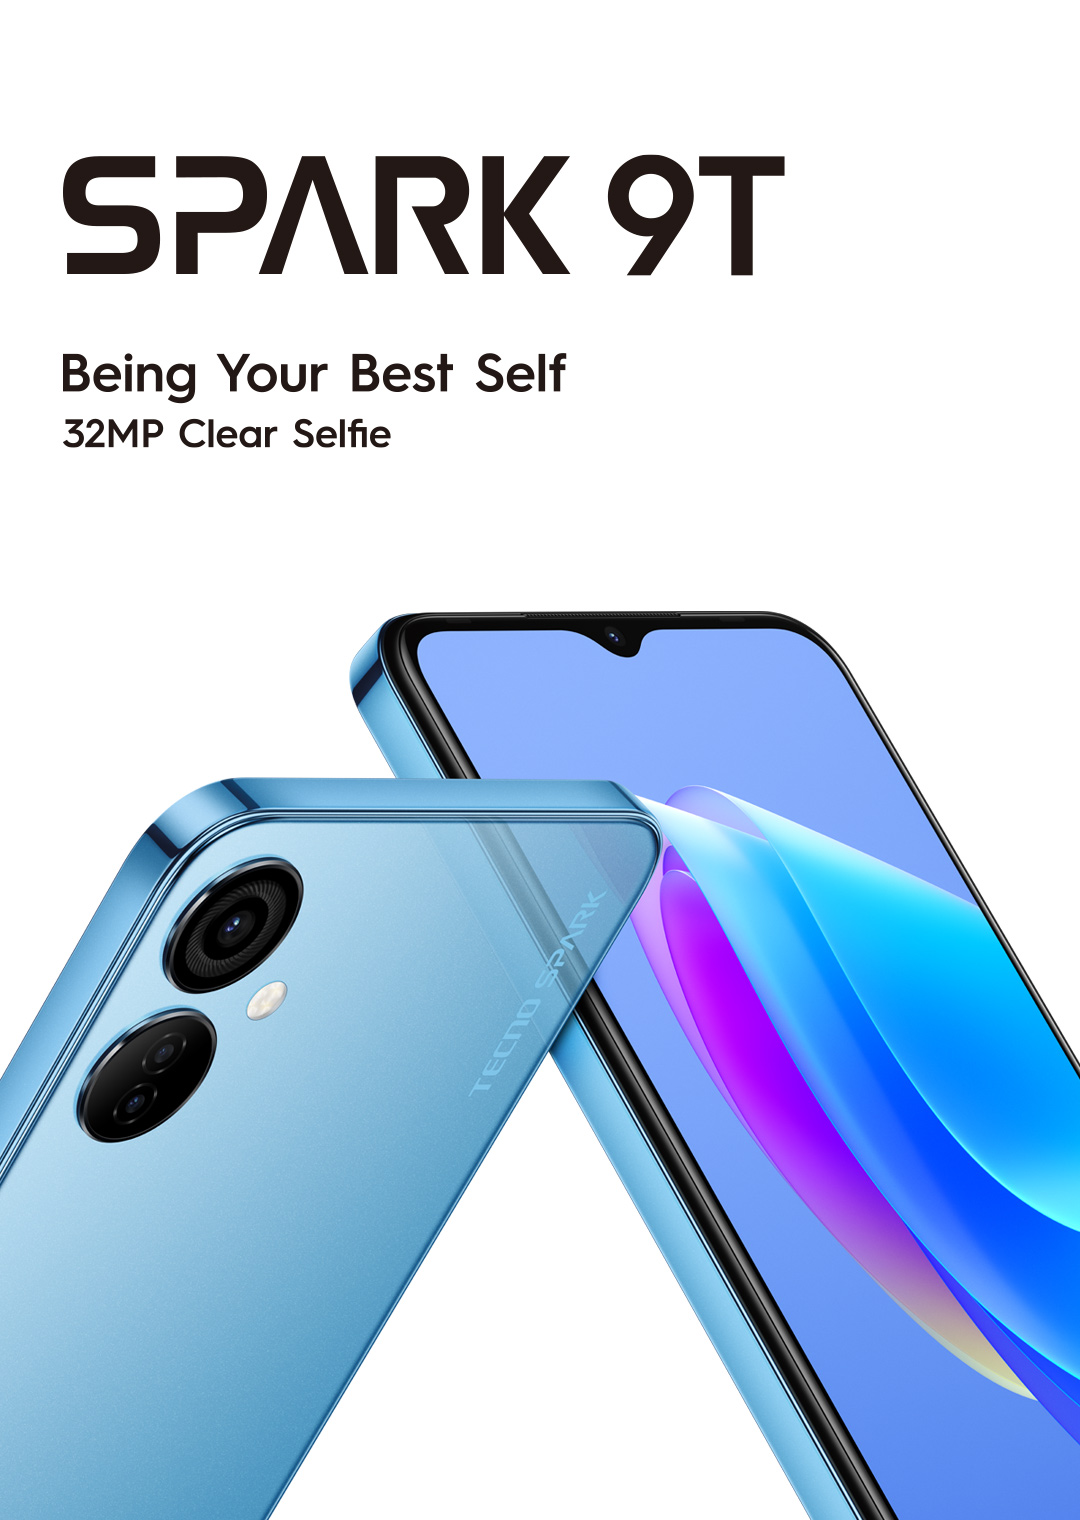 Spark 9T - Bring Your Best Selfie